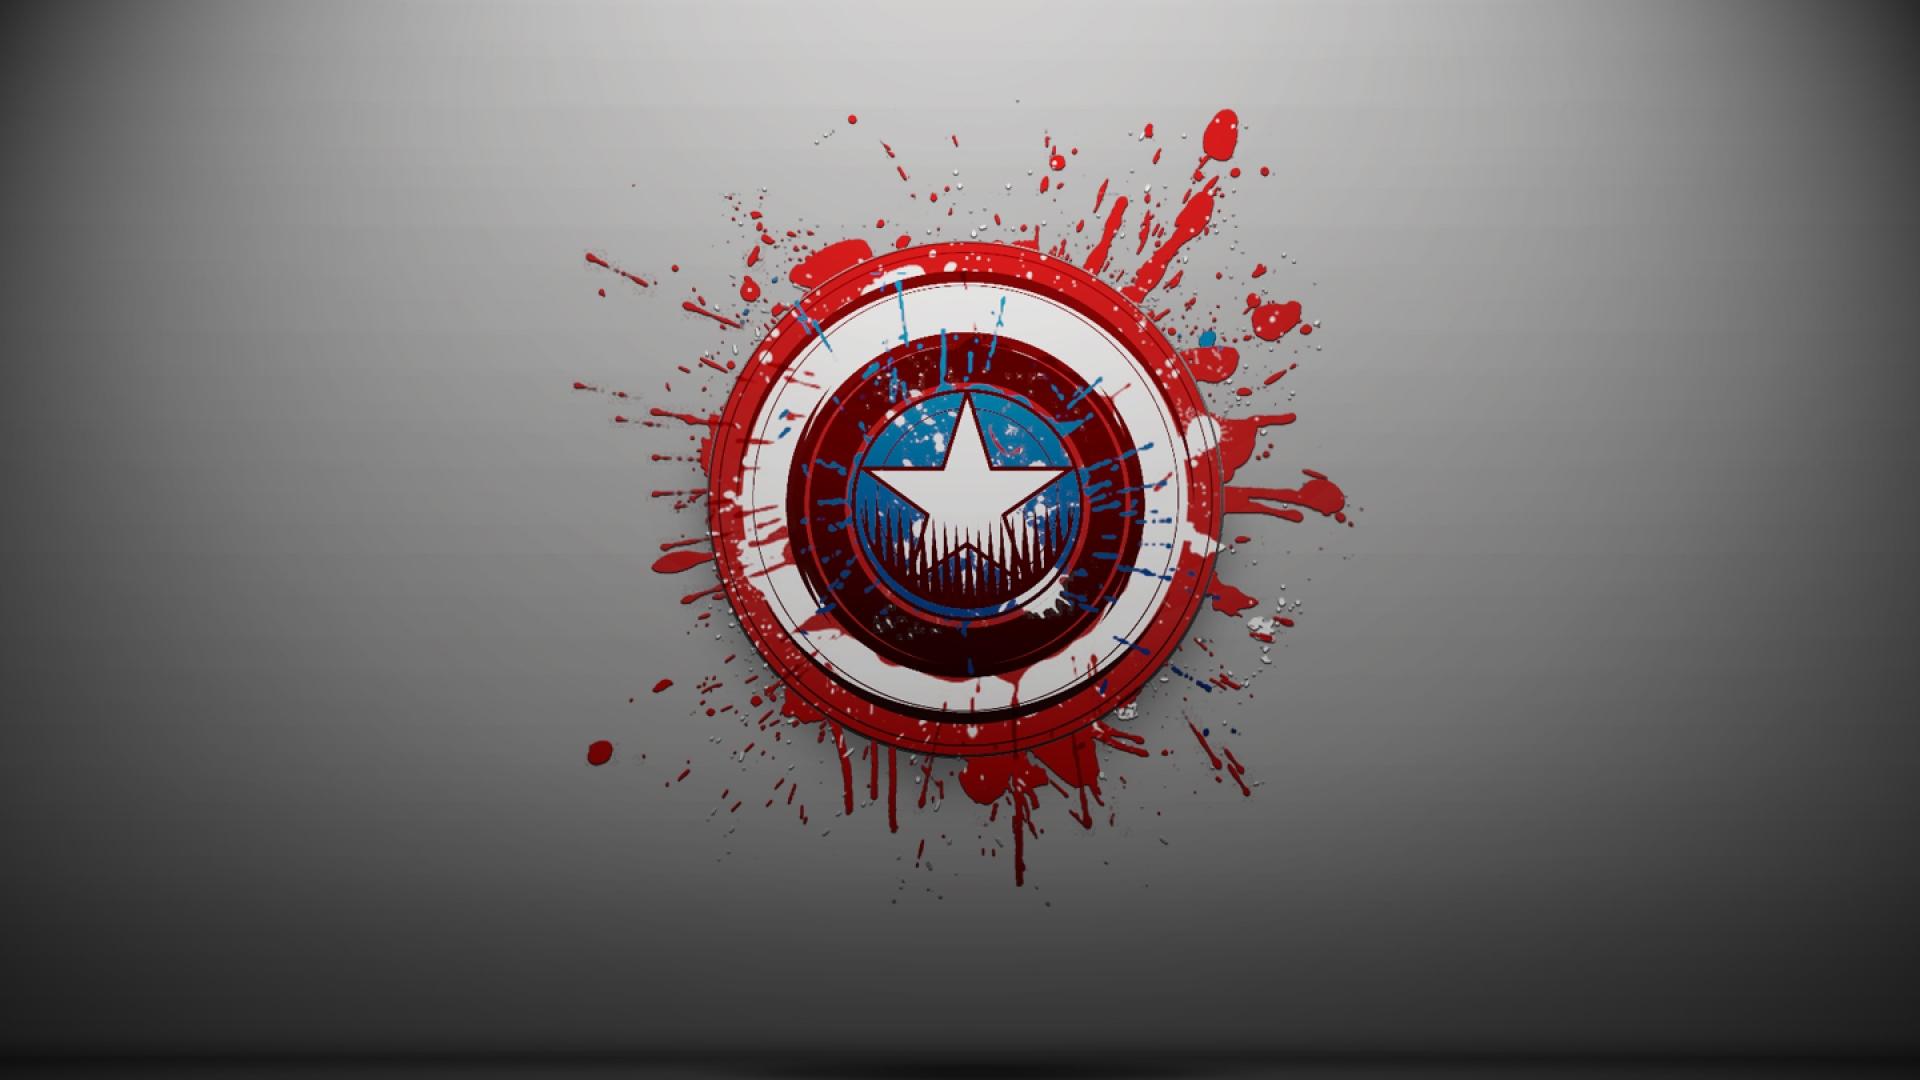 Captain America Logo wallpaper